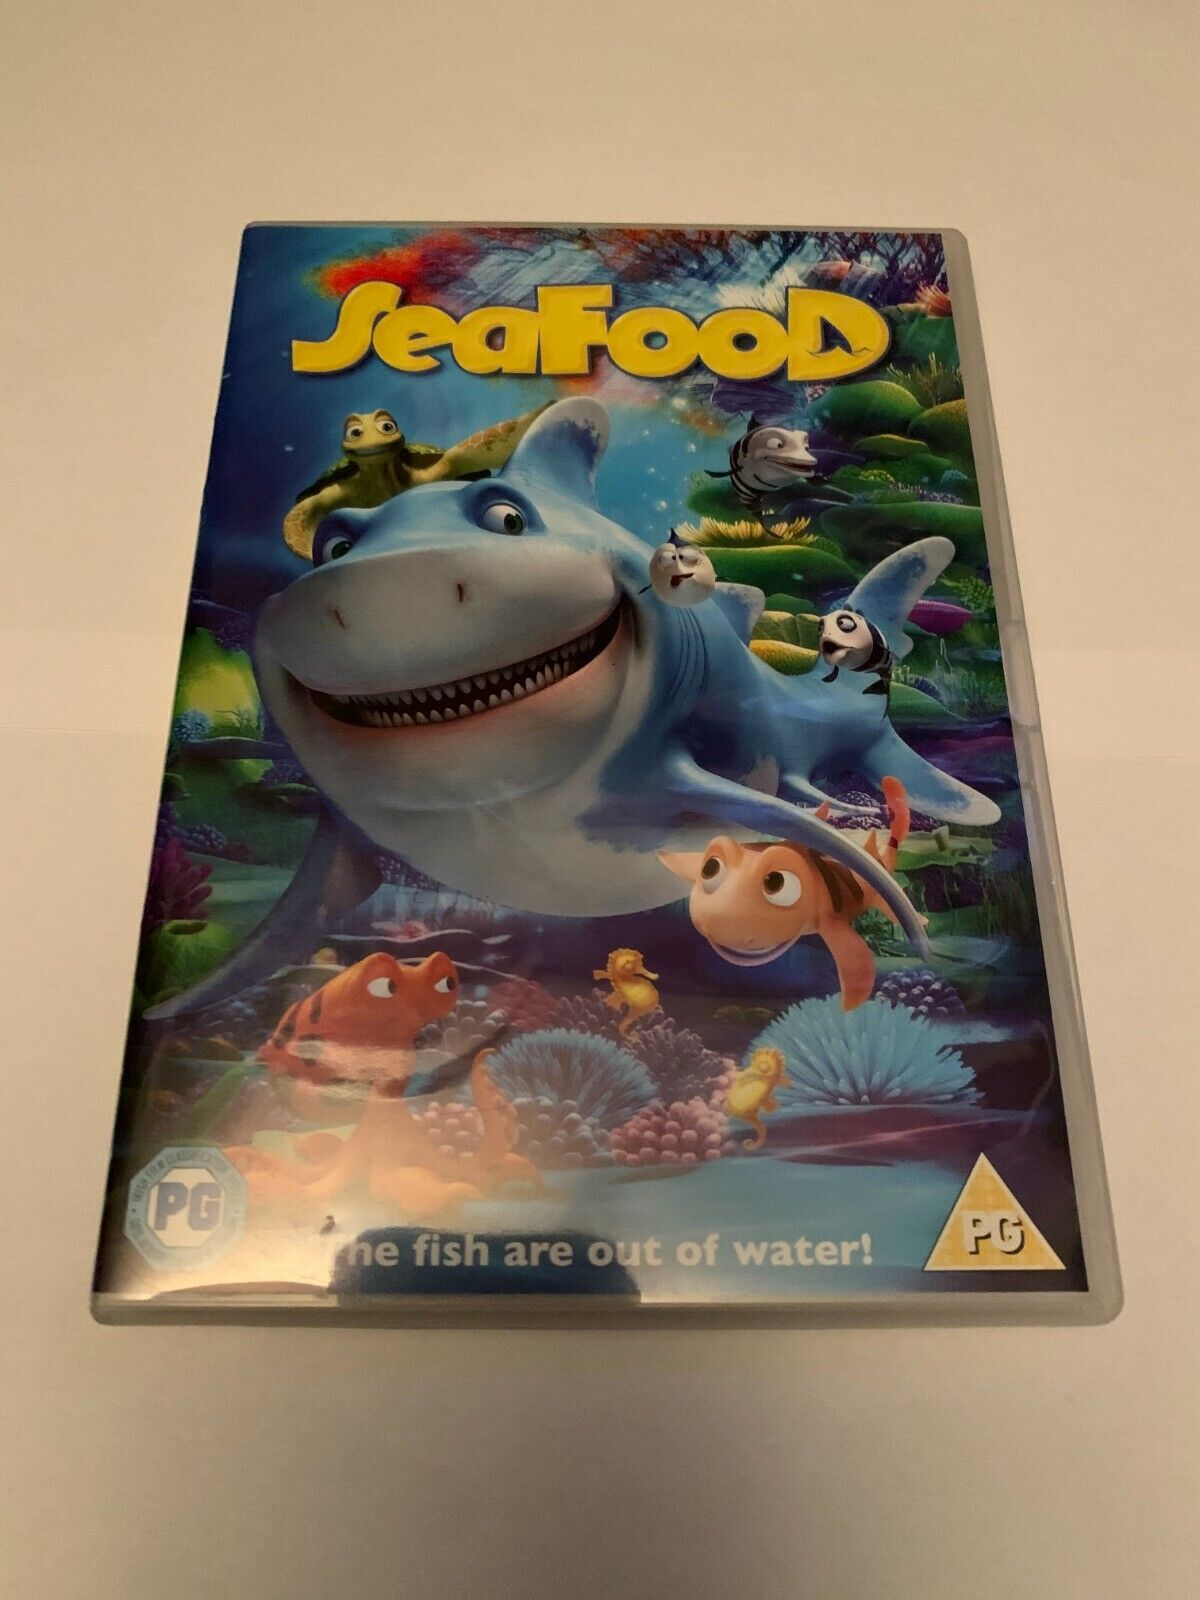 Seefood (DVD, 2012) childrens fish cartoon film, region 2 uk dvd  5060223767000 | eBay